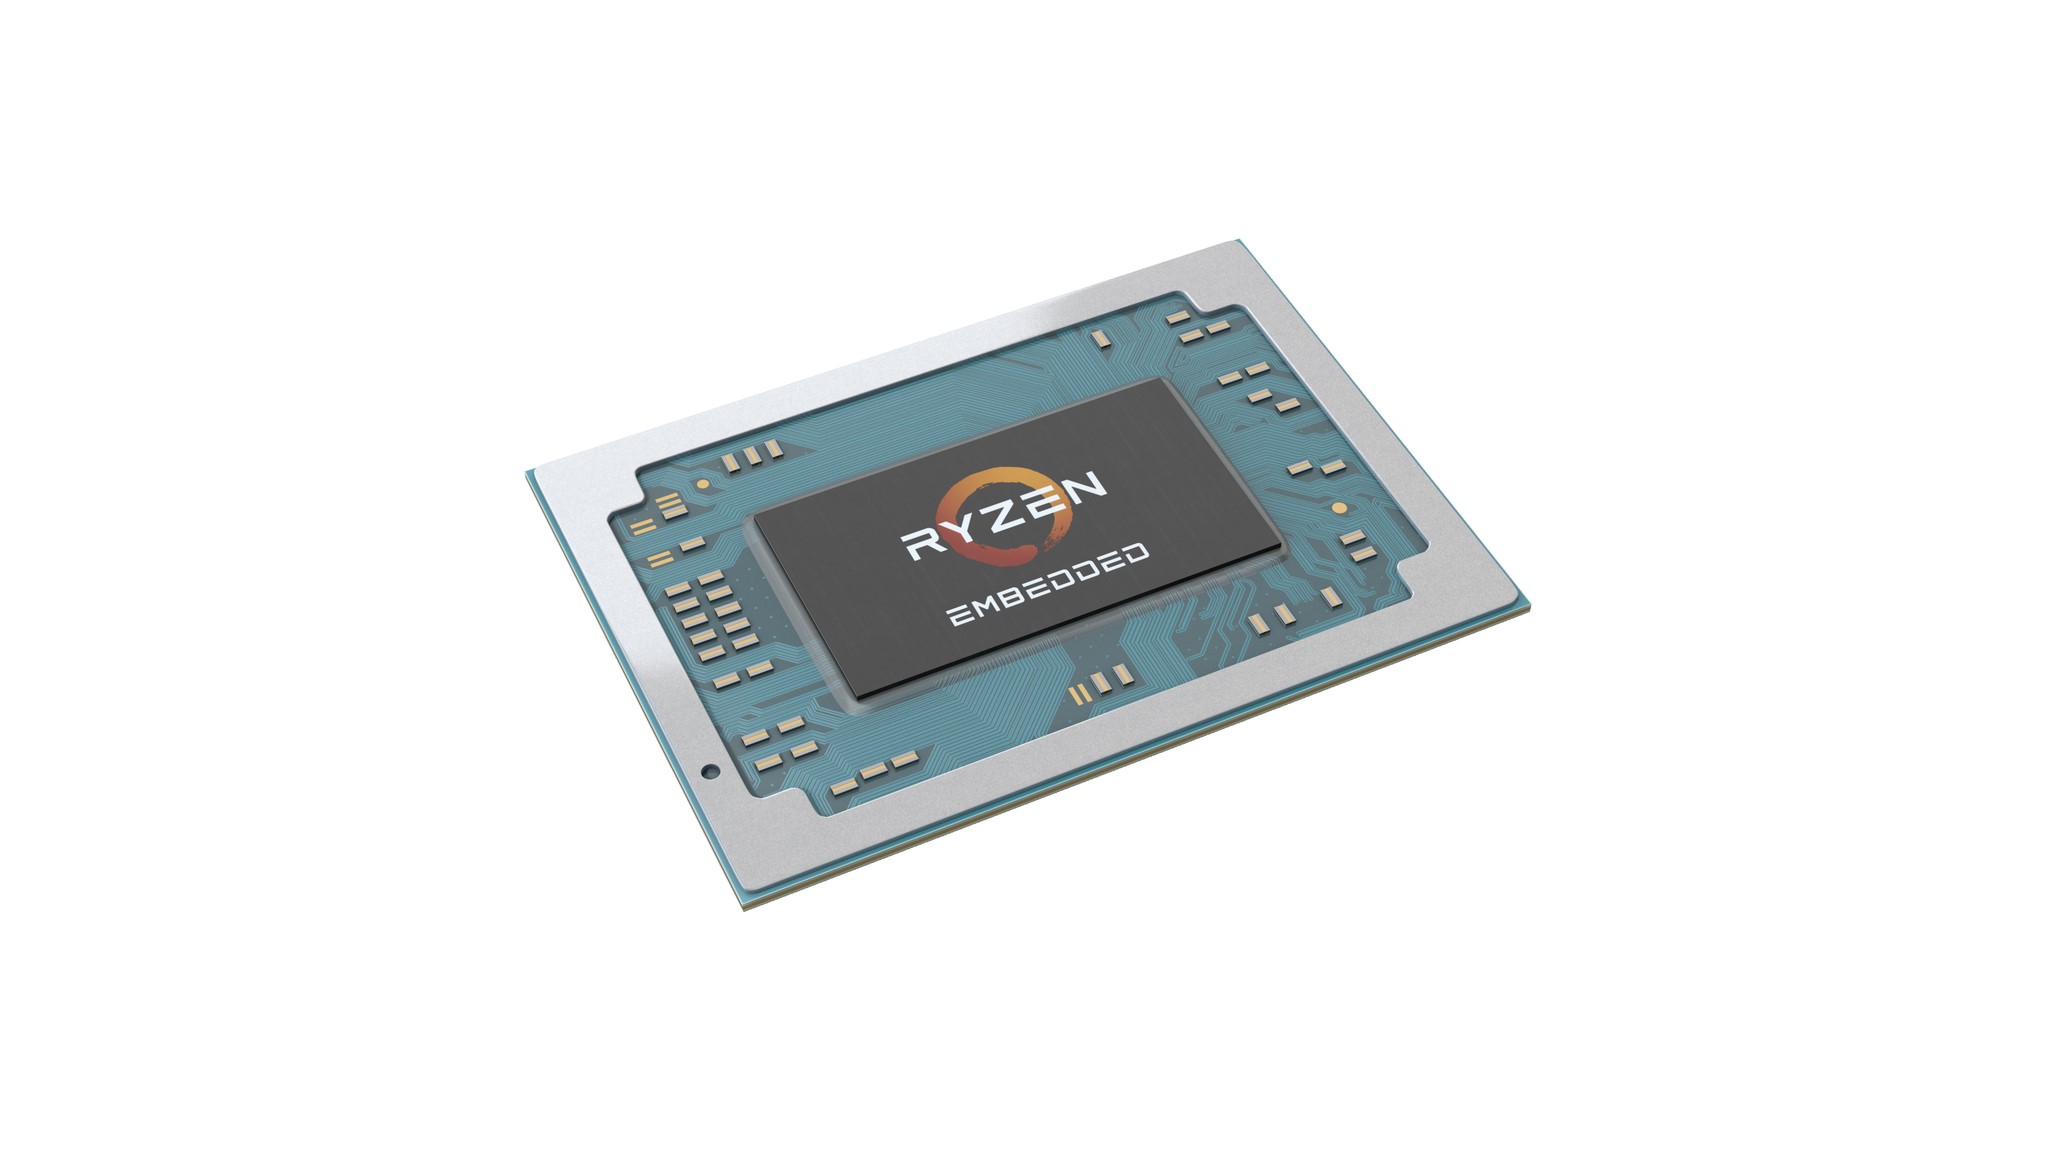 AMD Ryzen embedded